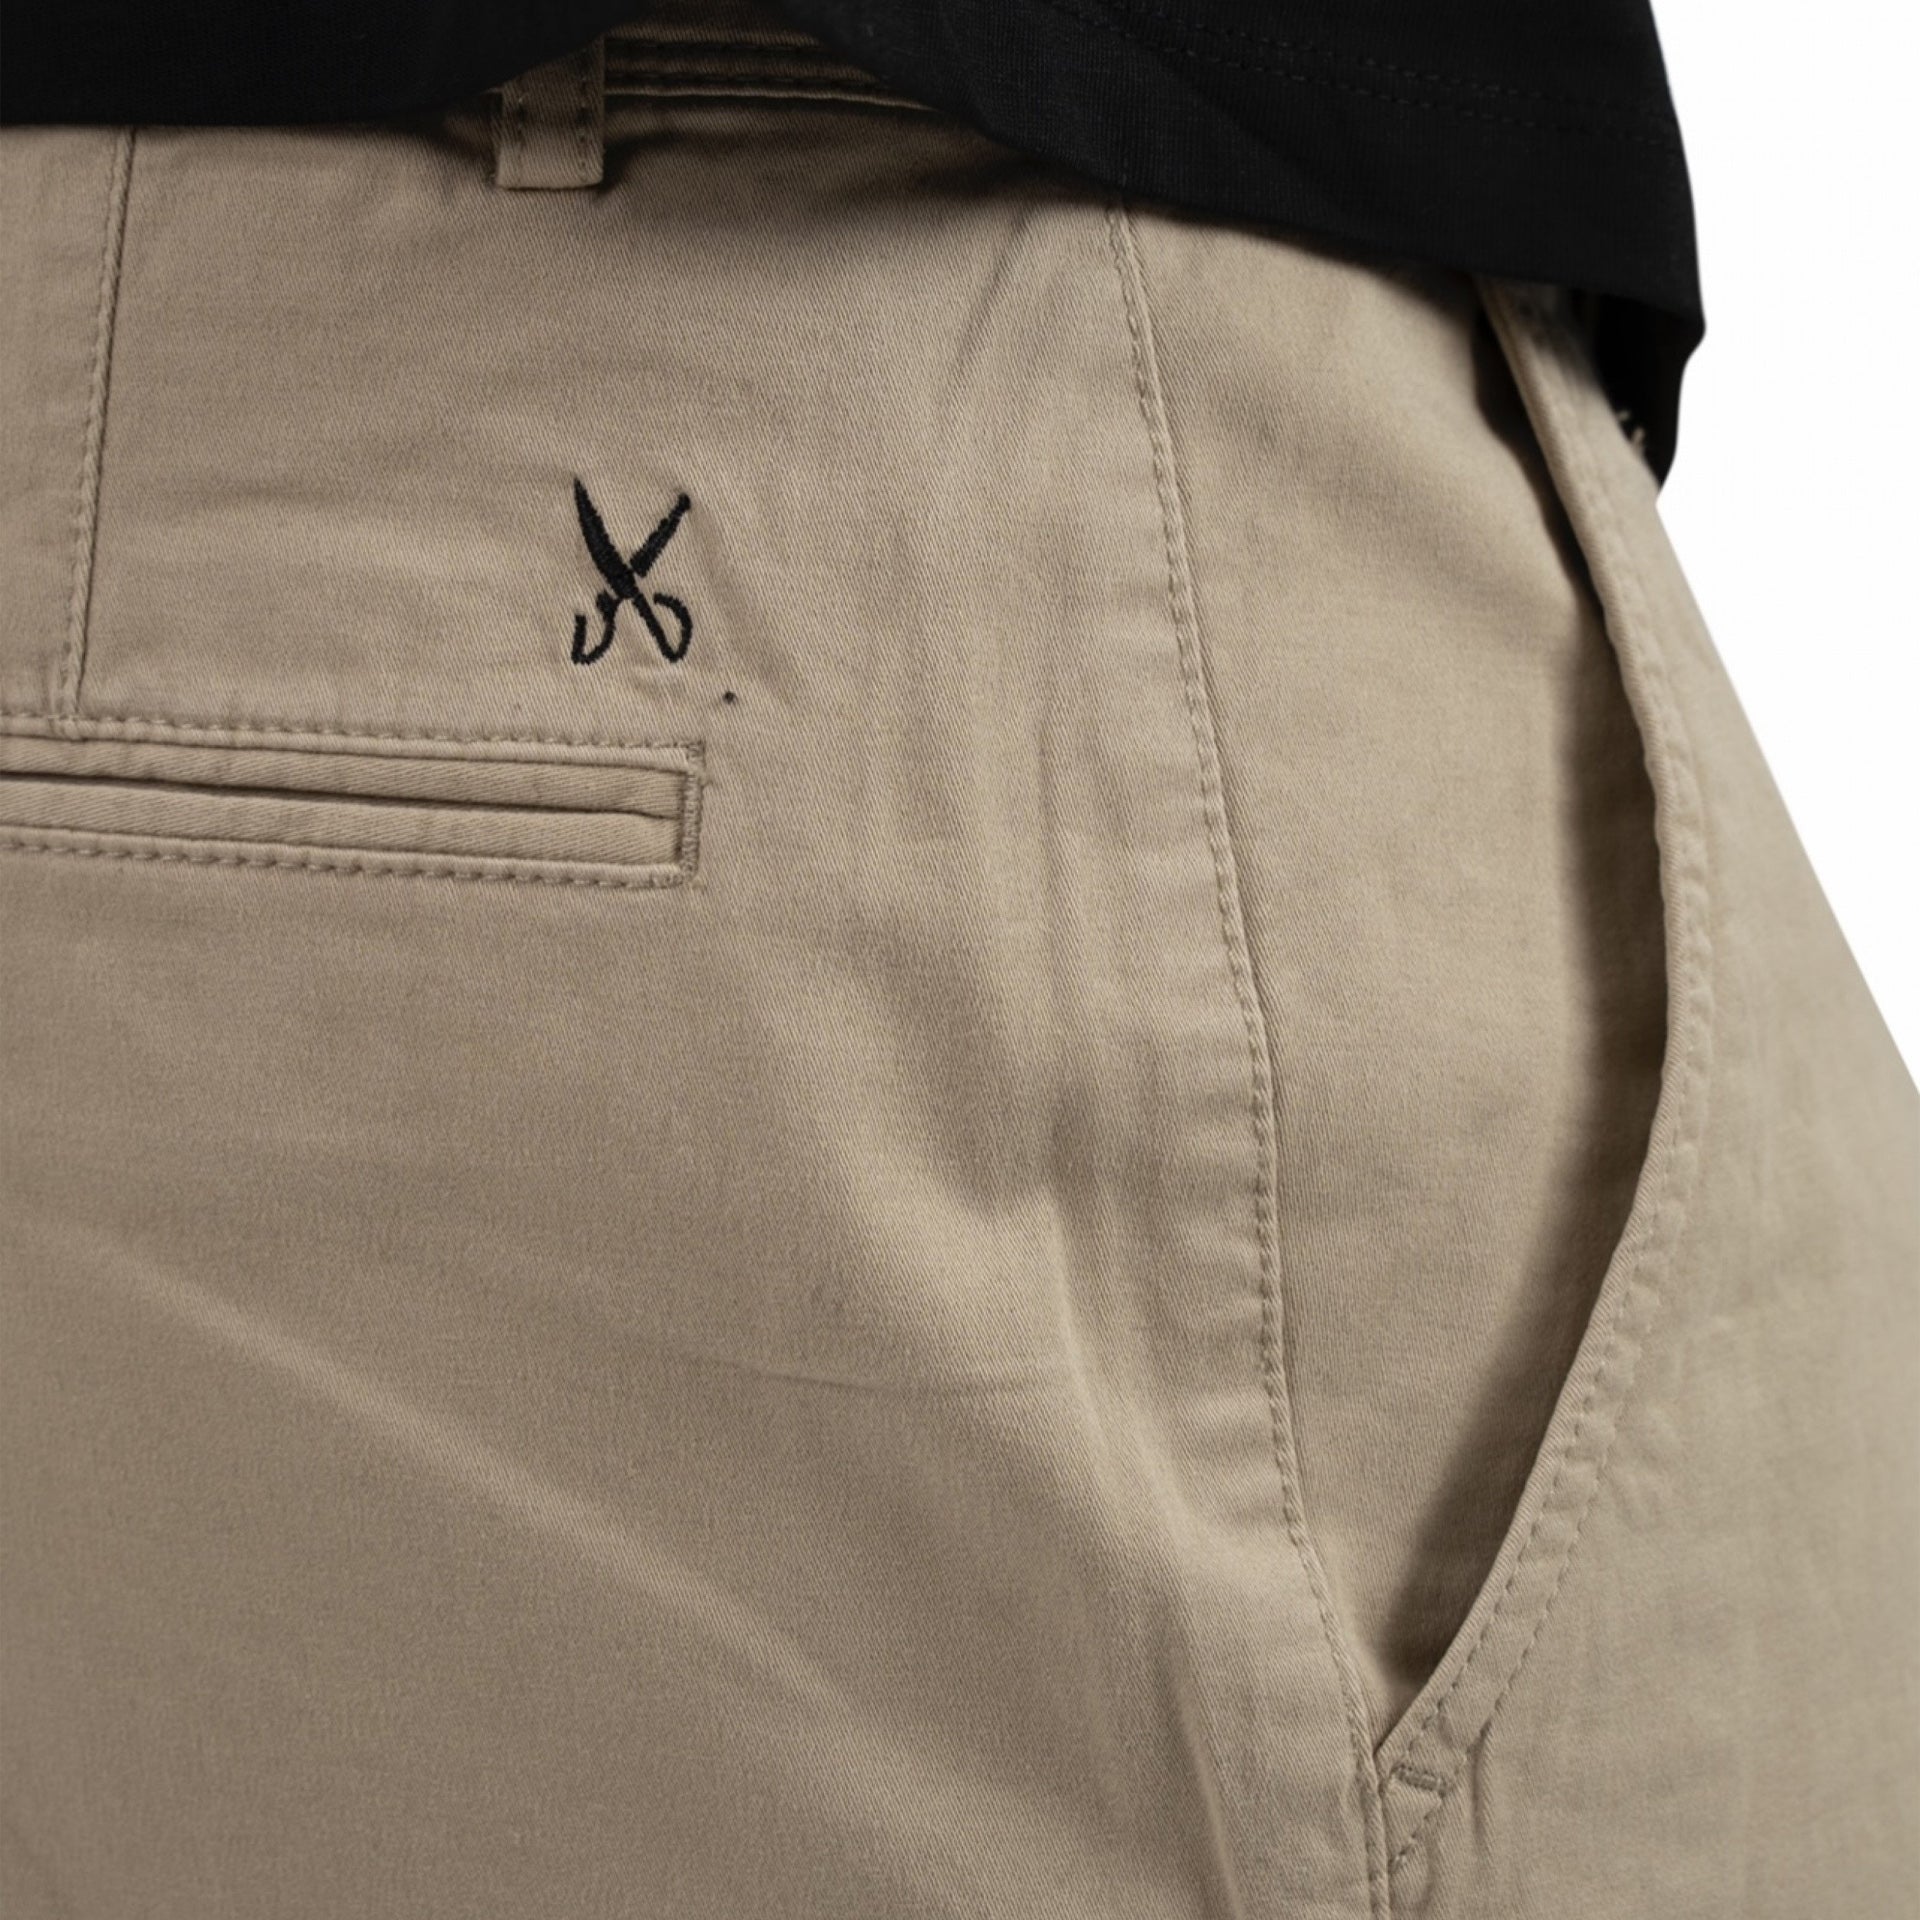 Beige Jeans Shorts From Weaver Design